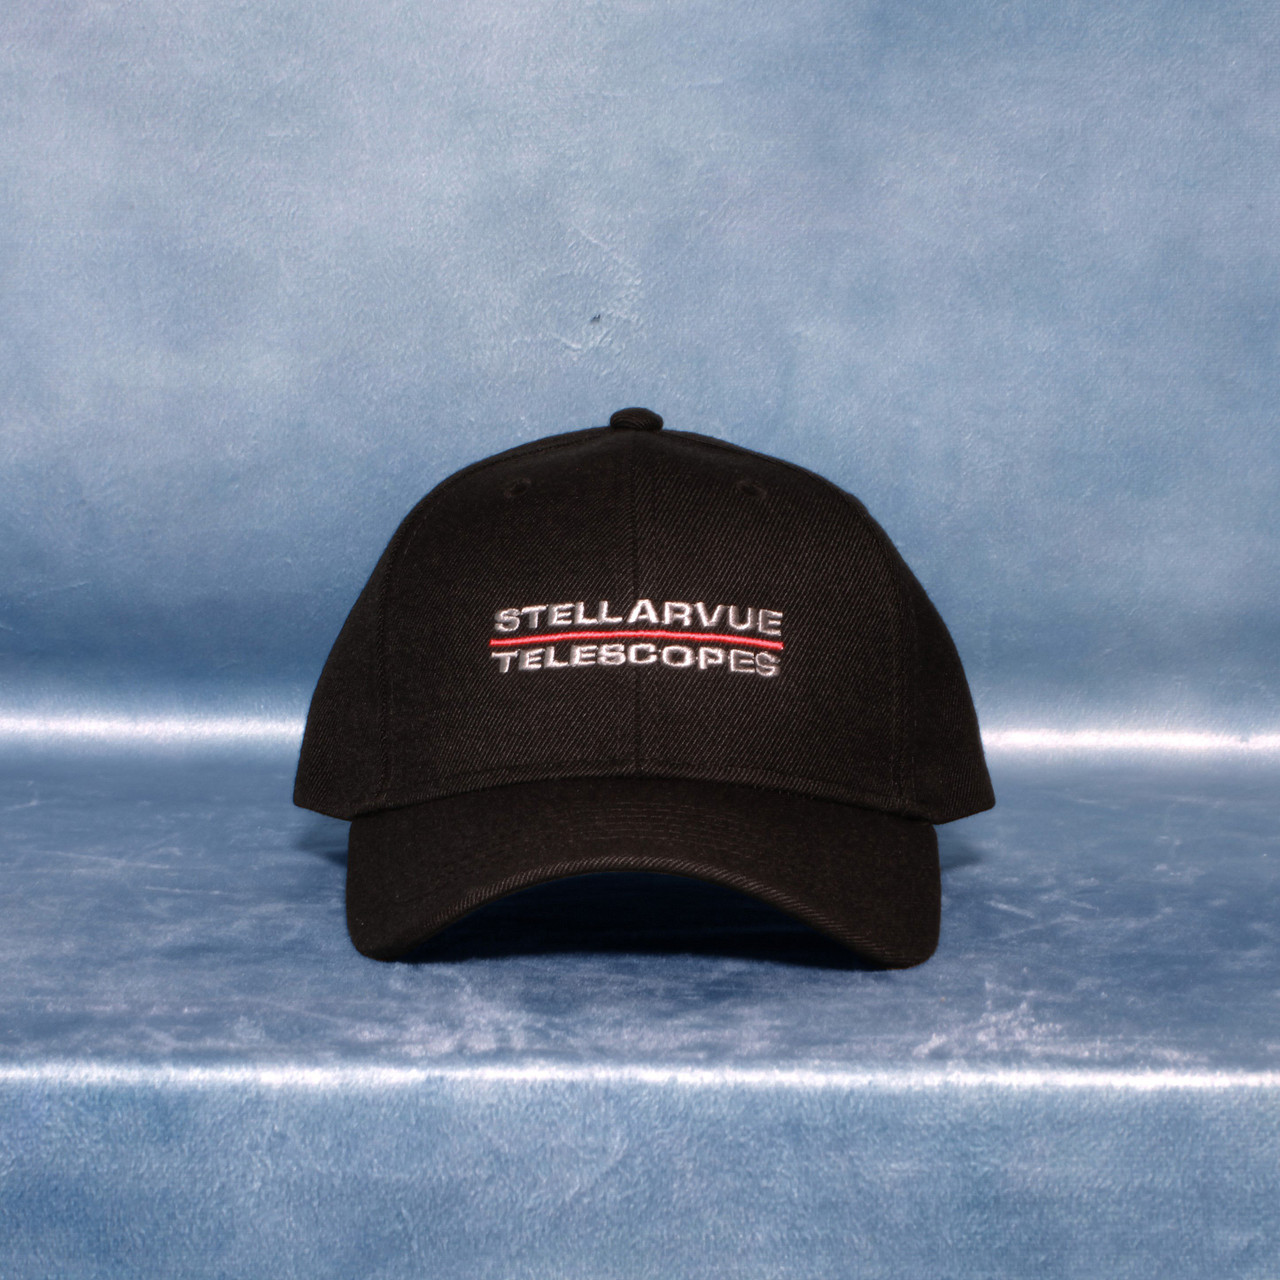 1. Stellarvue Telescopes Hat